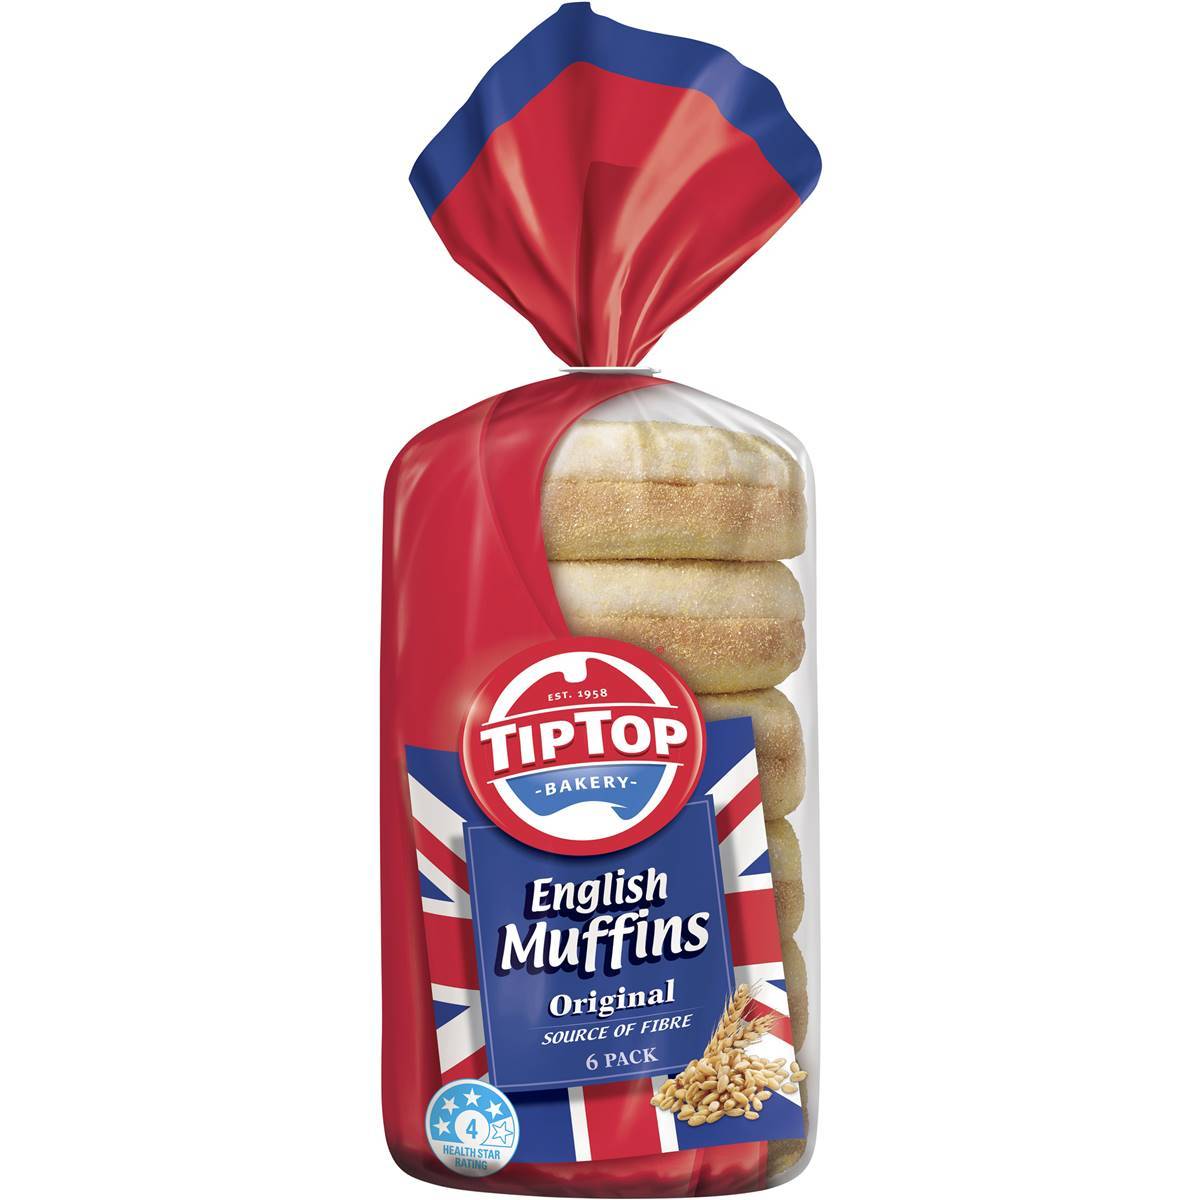 Tip Top English Muffins Original 6 Pack